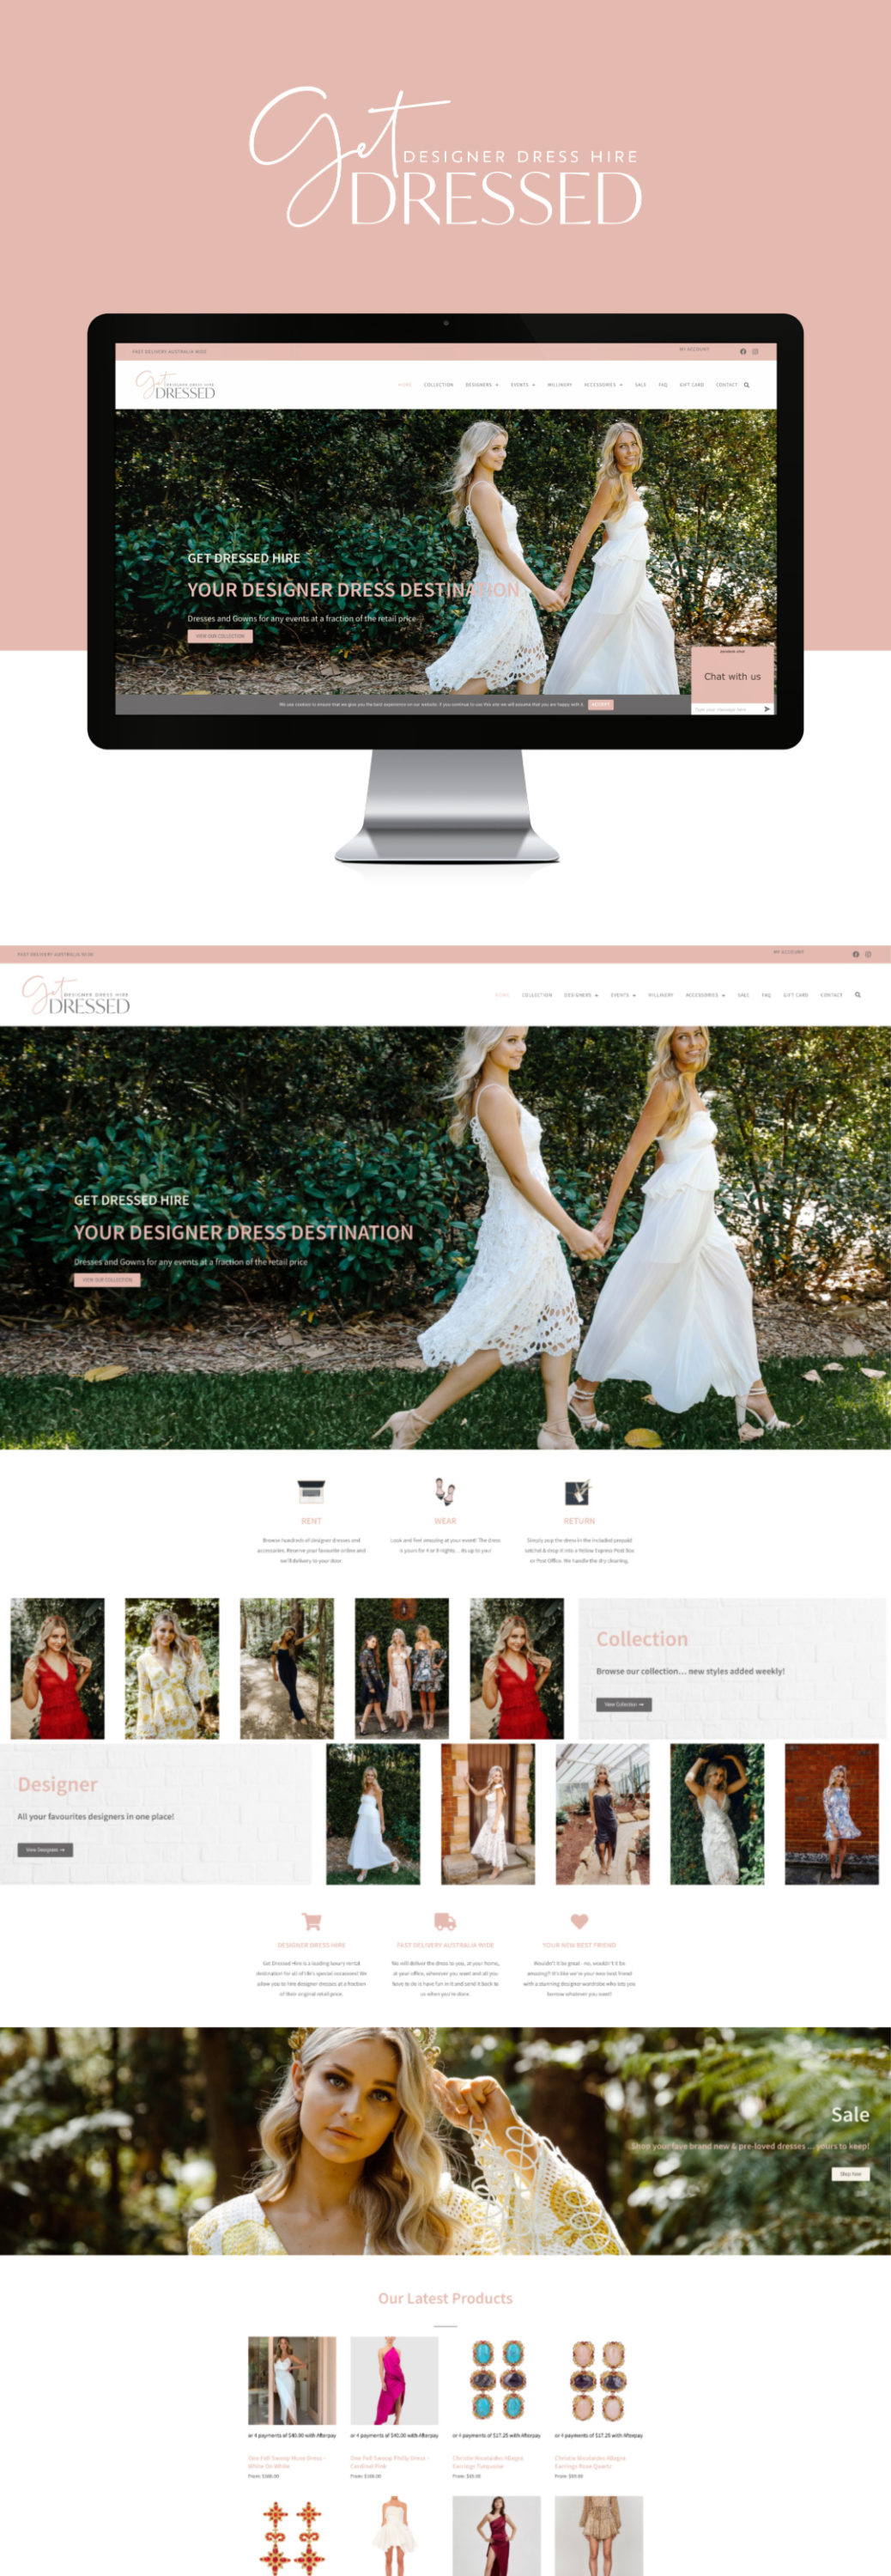 Wordpress website design designer dress rental